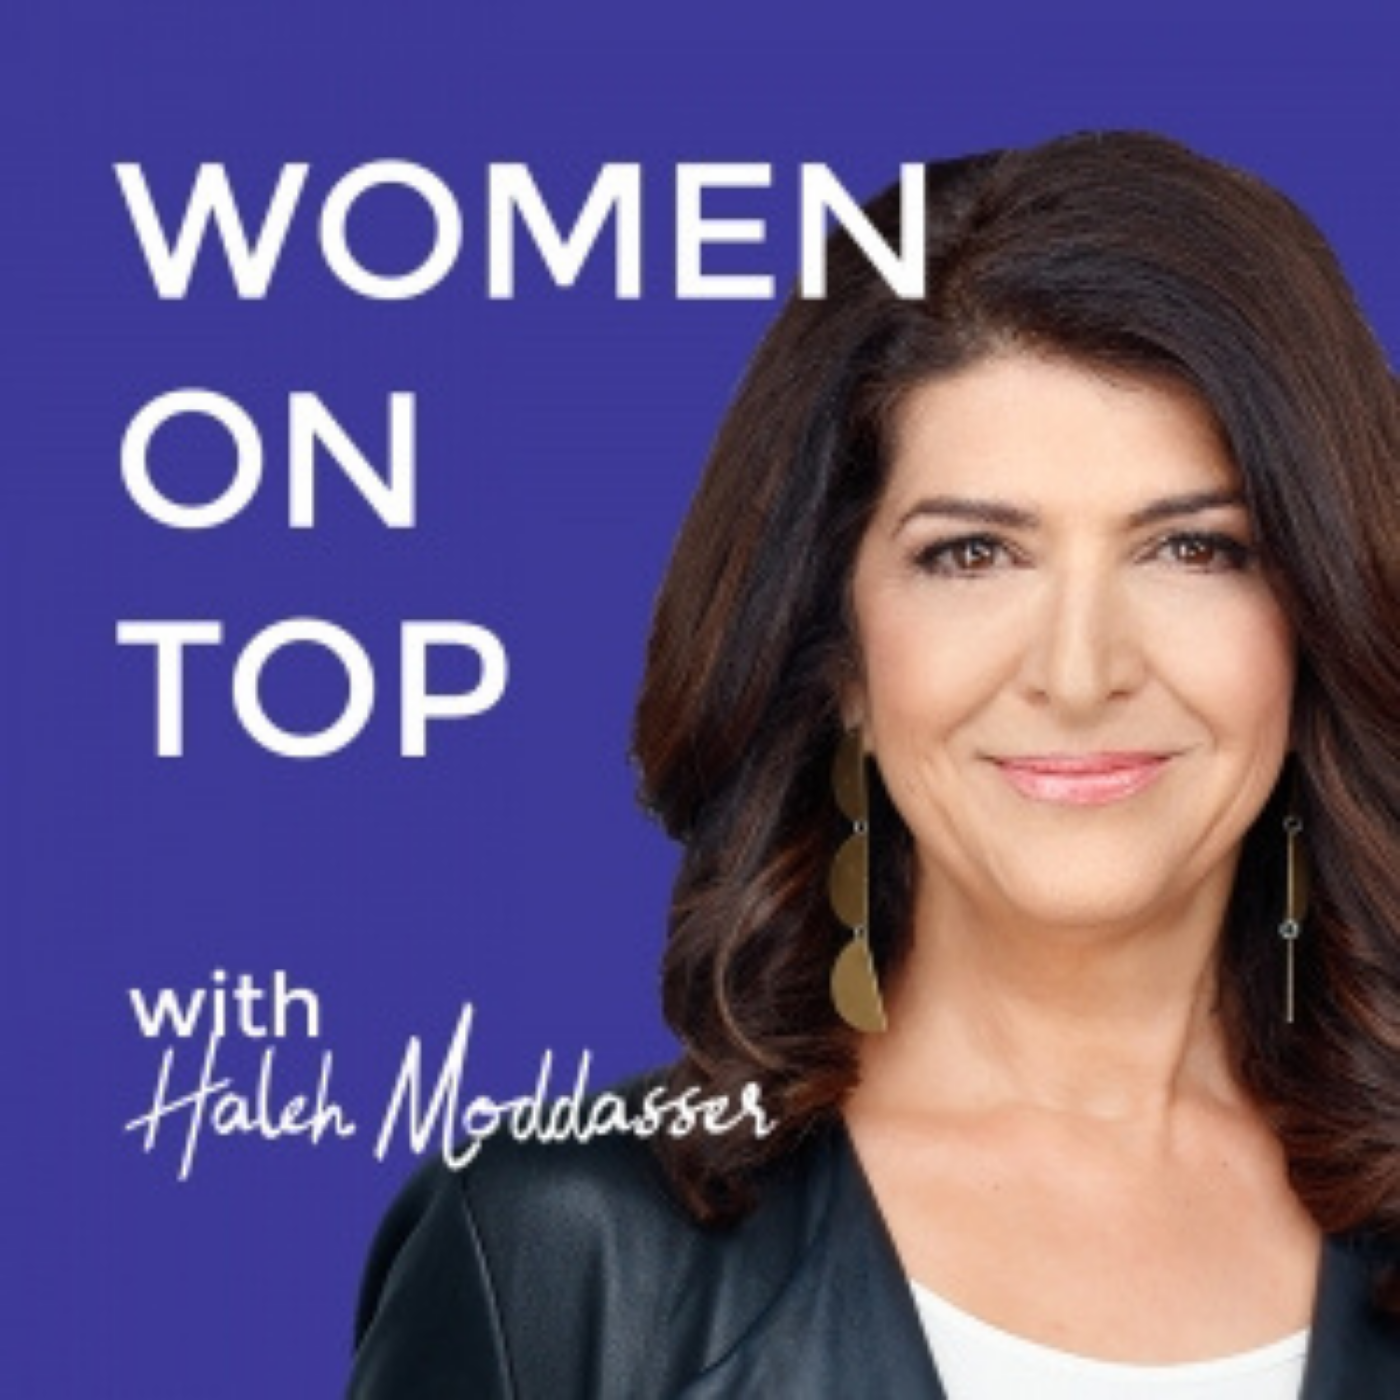 Artwork for podcast Women on Top with Haleh Moddasser